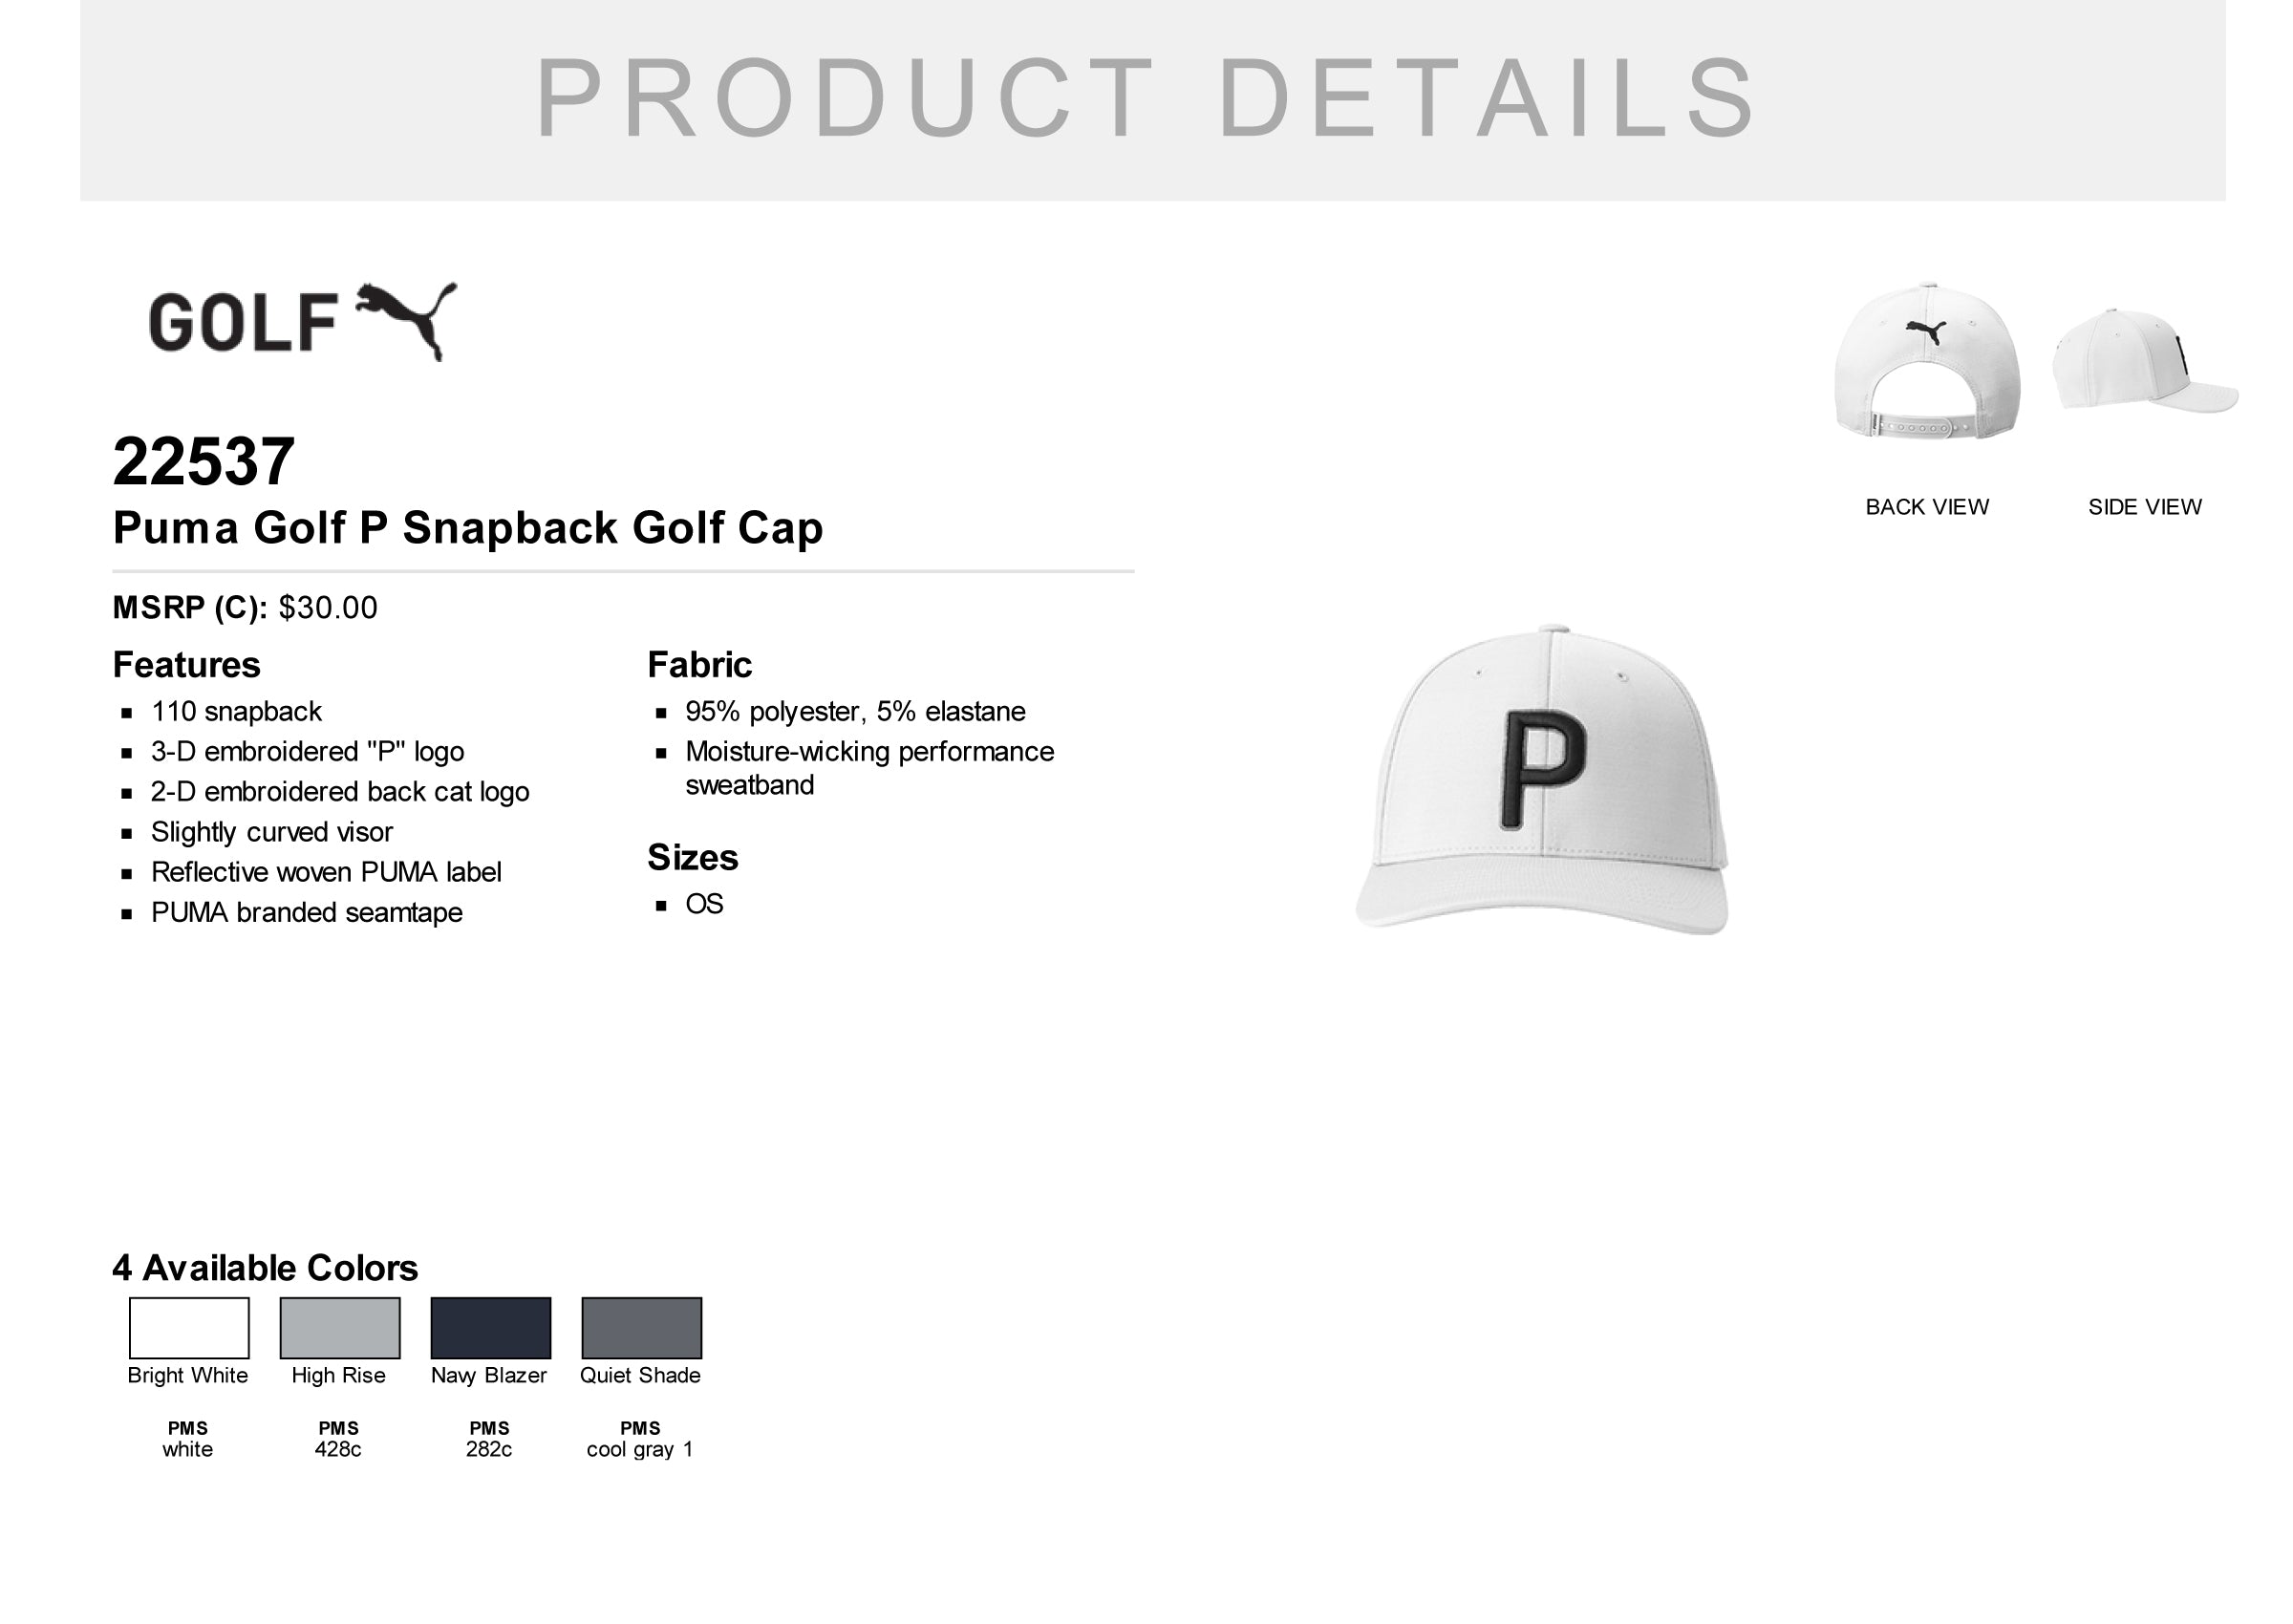 Puma Golf P Snapback Golf Cap